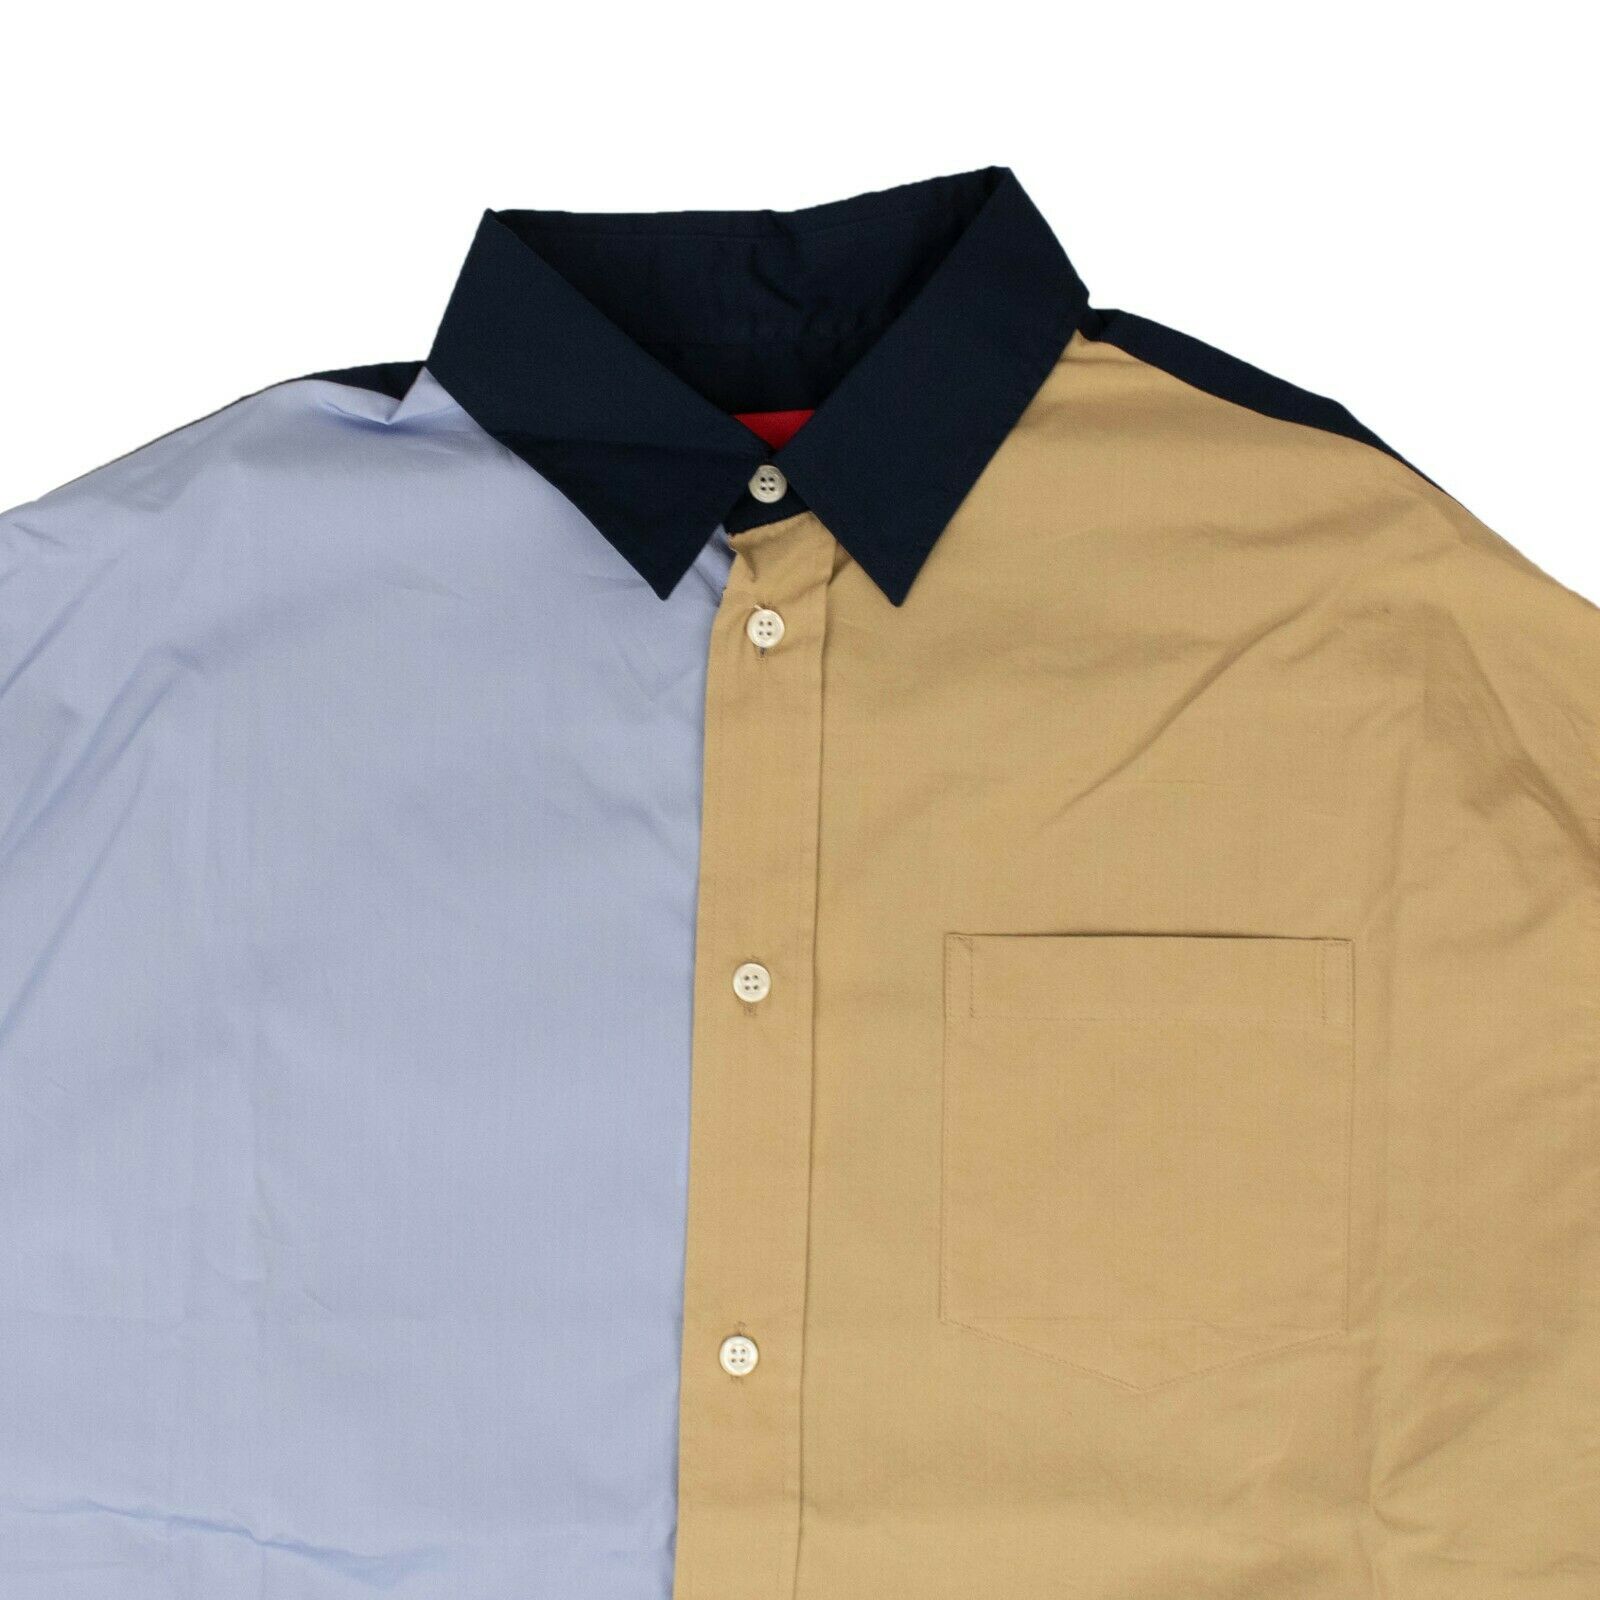 Pyer Moss Tan/Blue Multicolor Collar Shirt - Tan/Blue